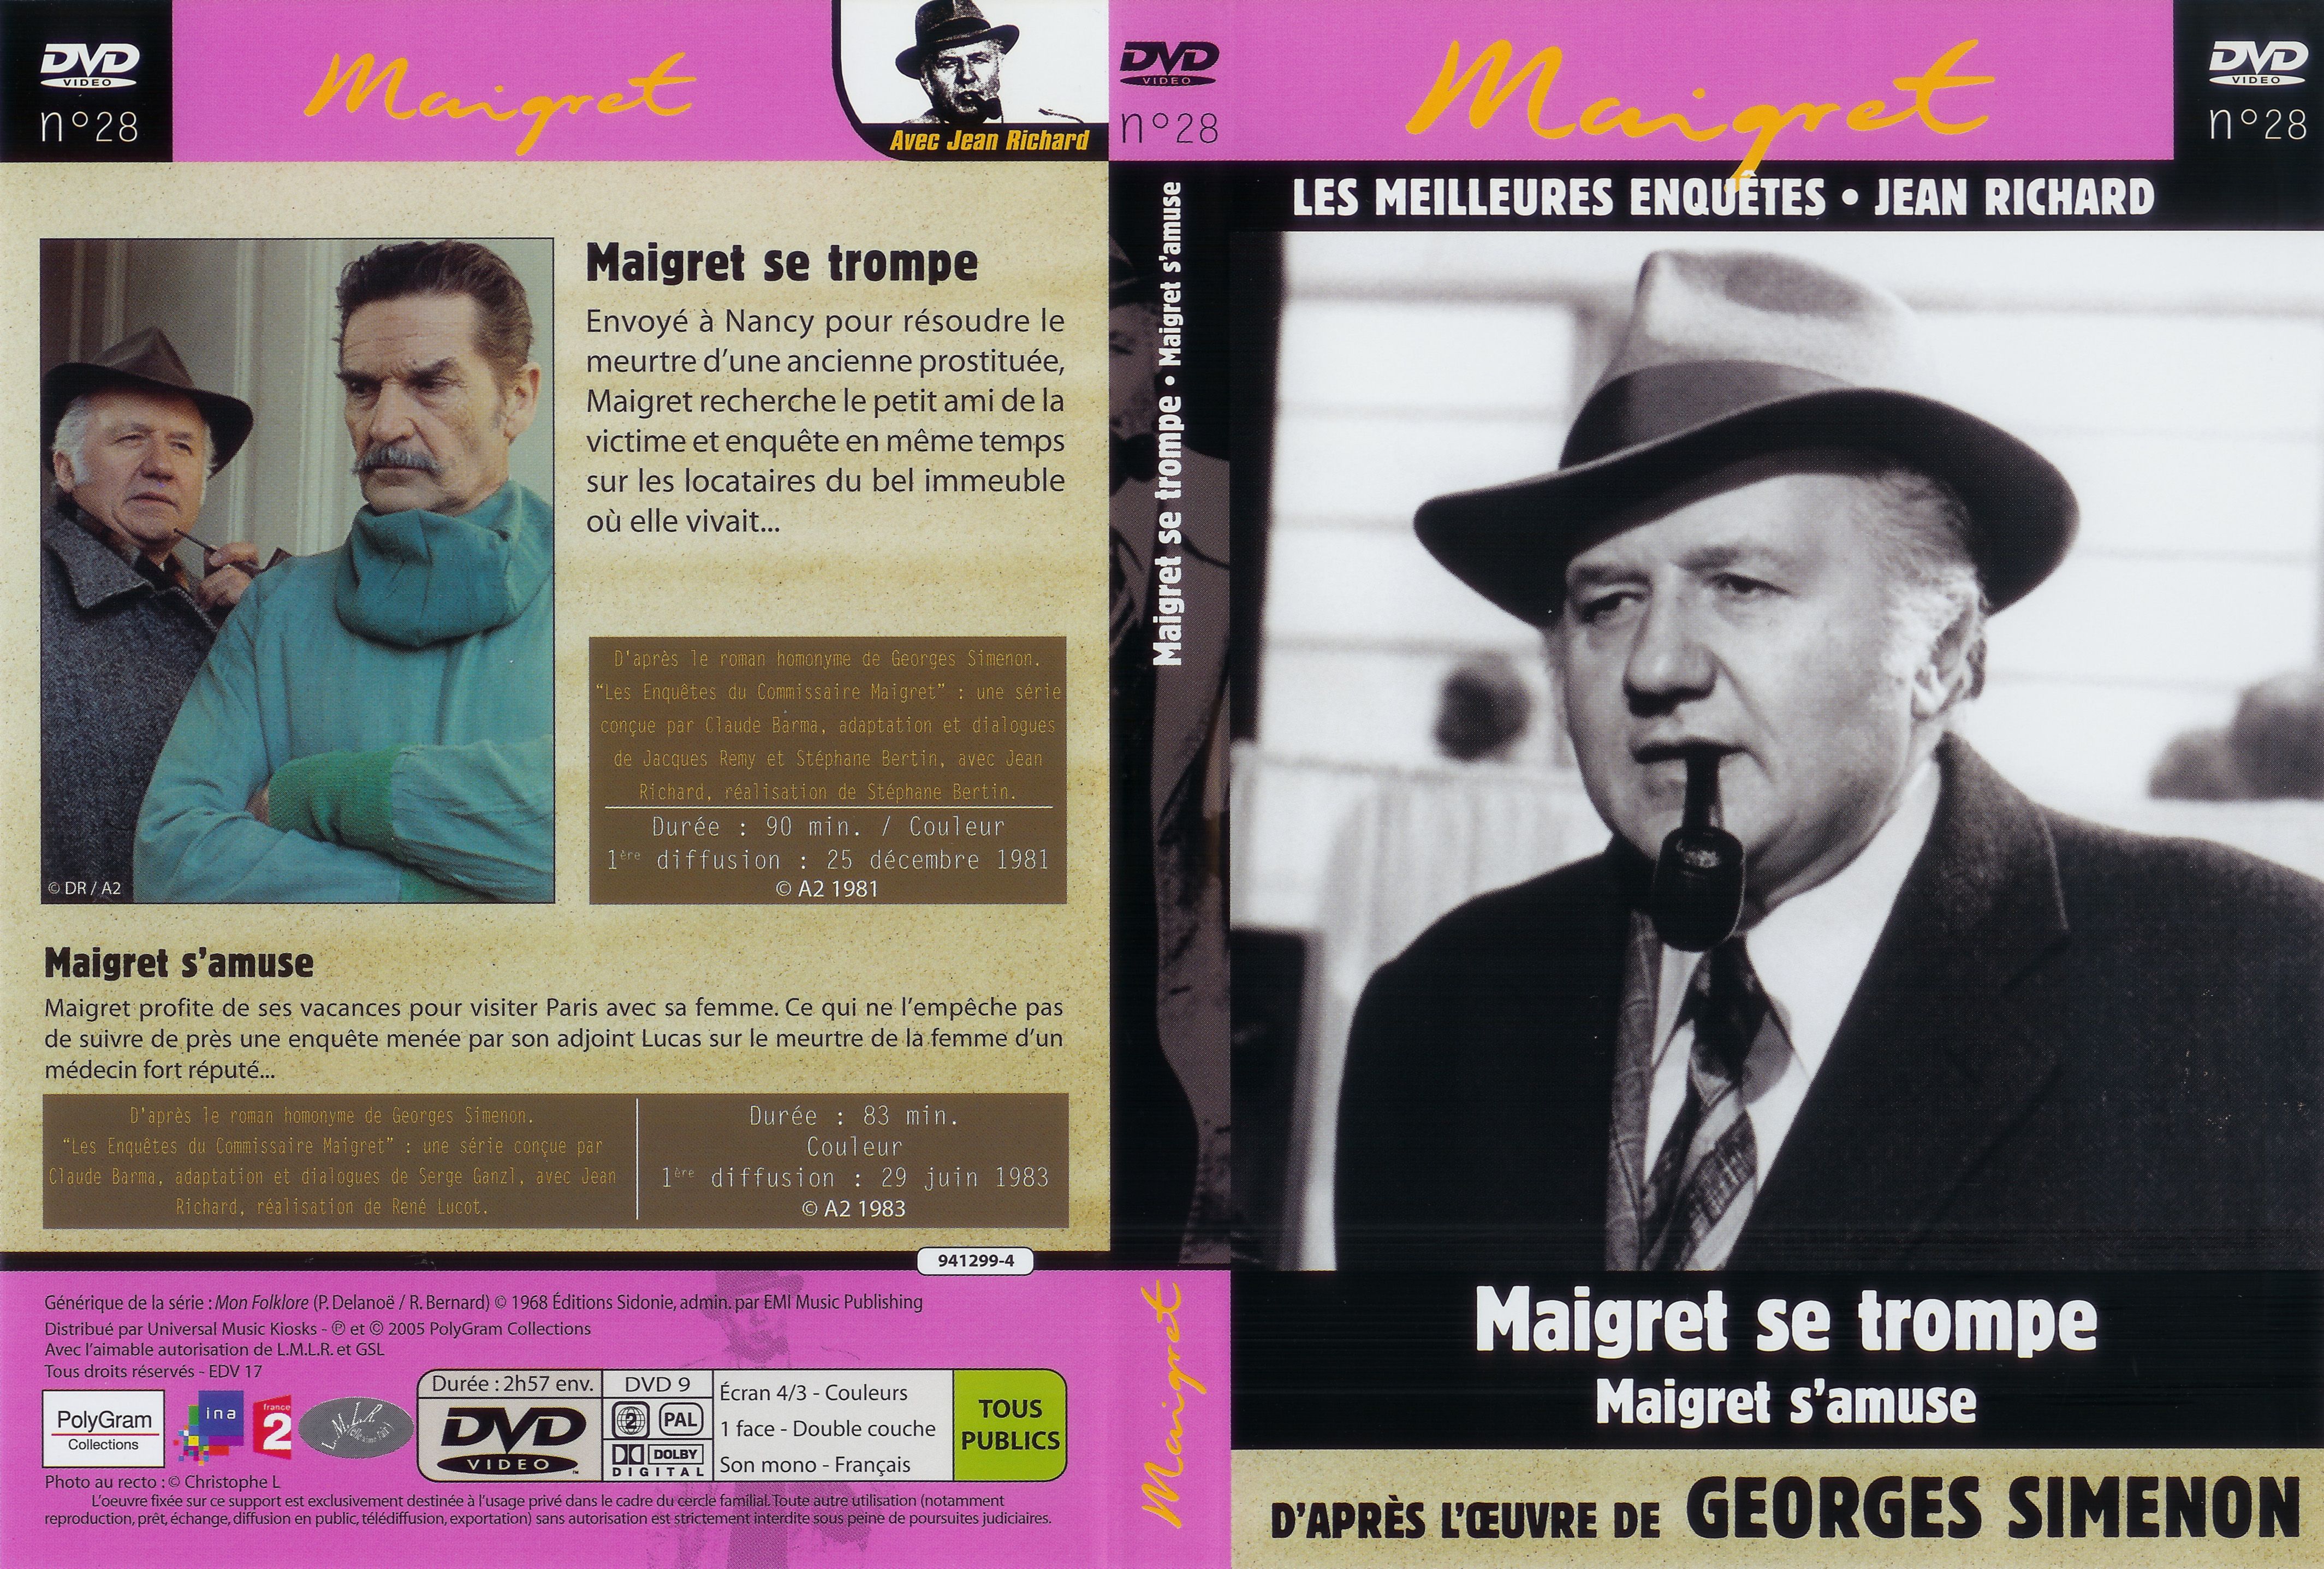 Jaquette DVD Maigret (Jean Richard) vol 28